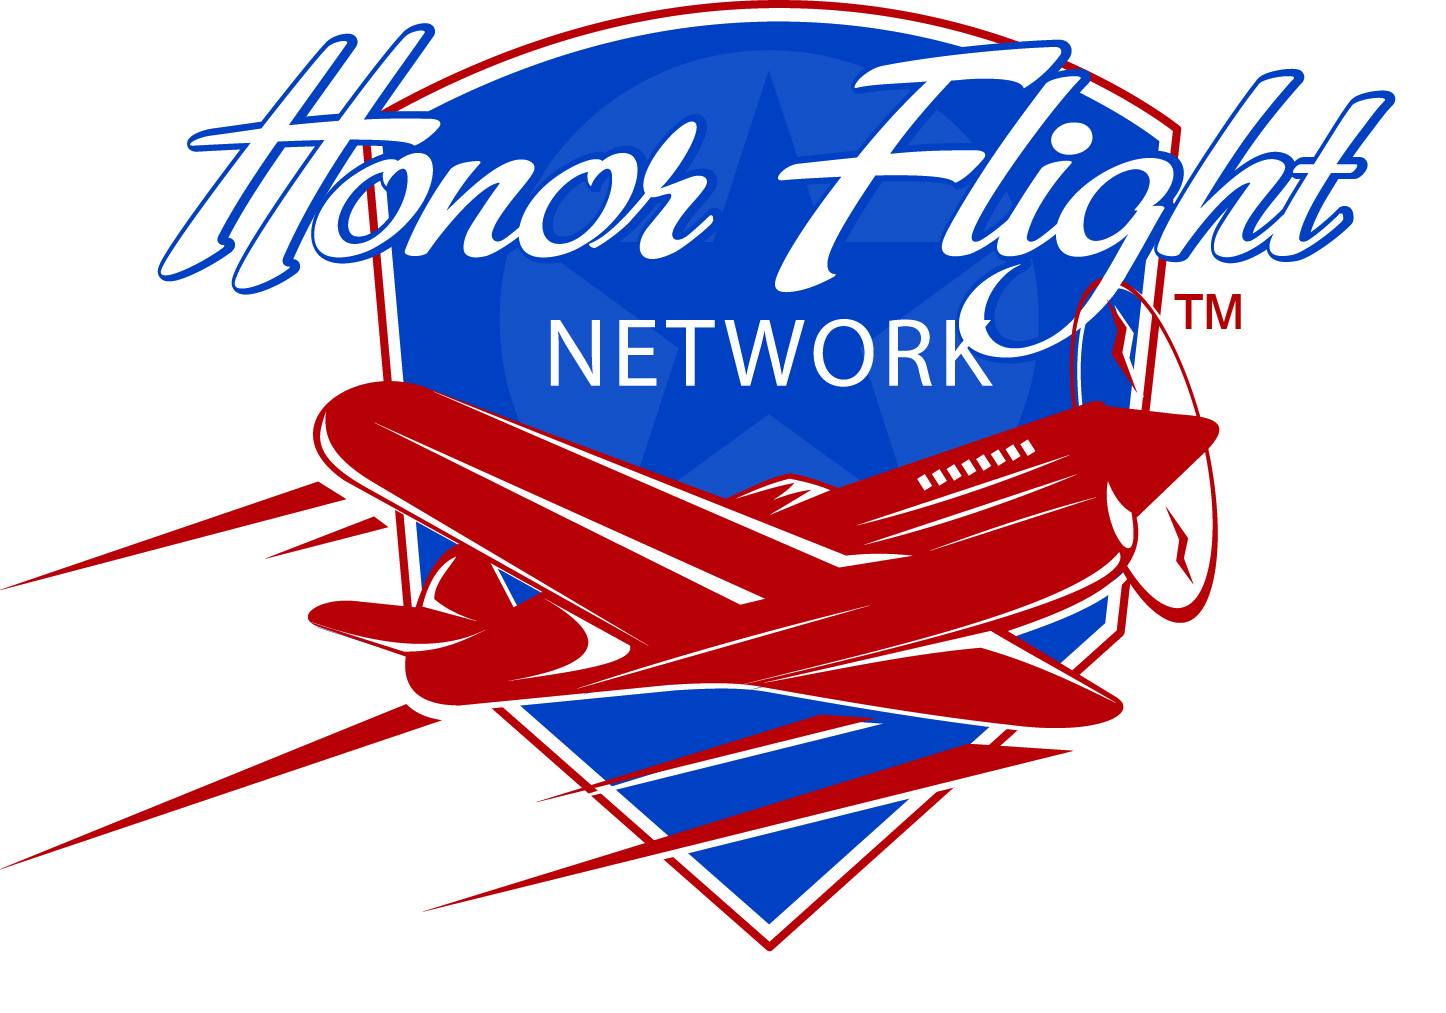 The Honor Flight Network